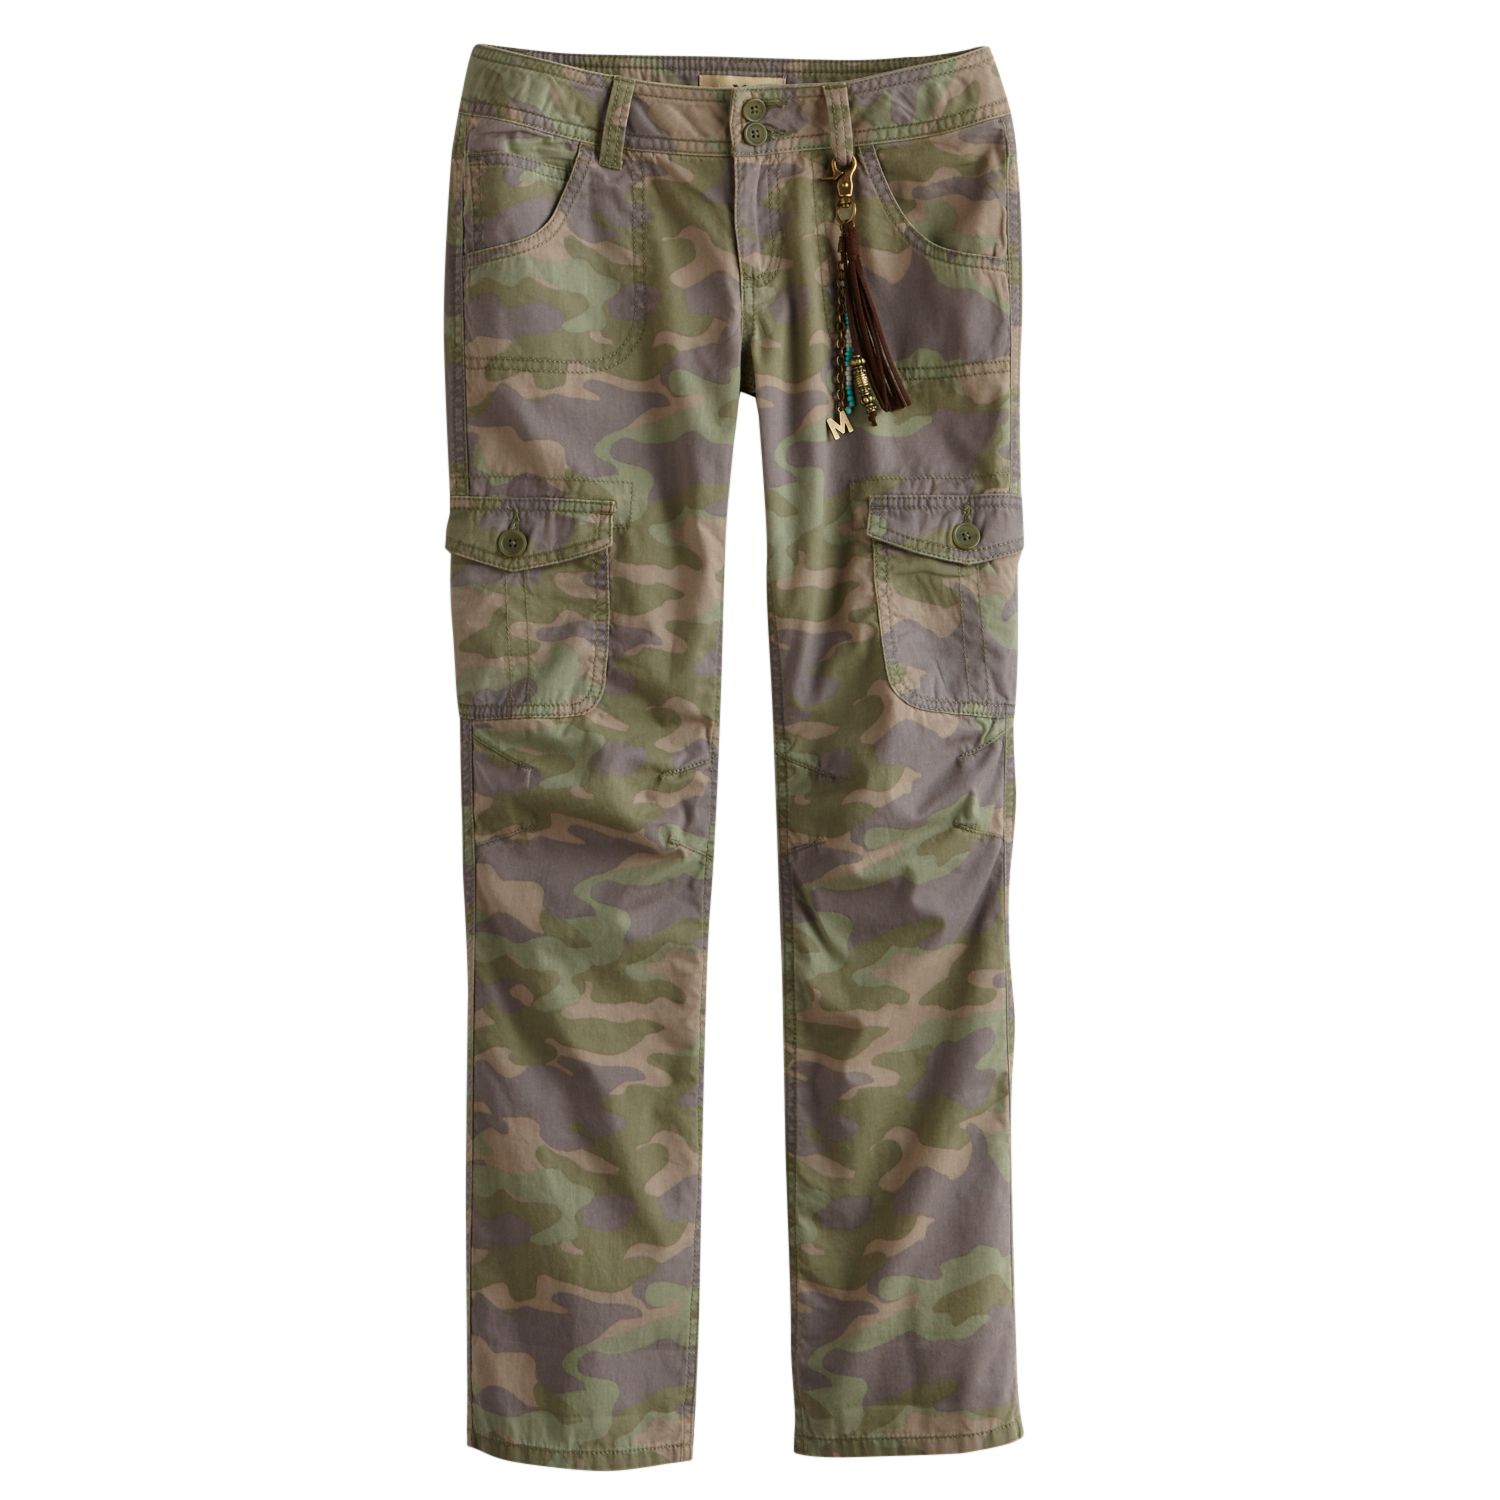 kohls camouflage pants